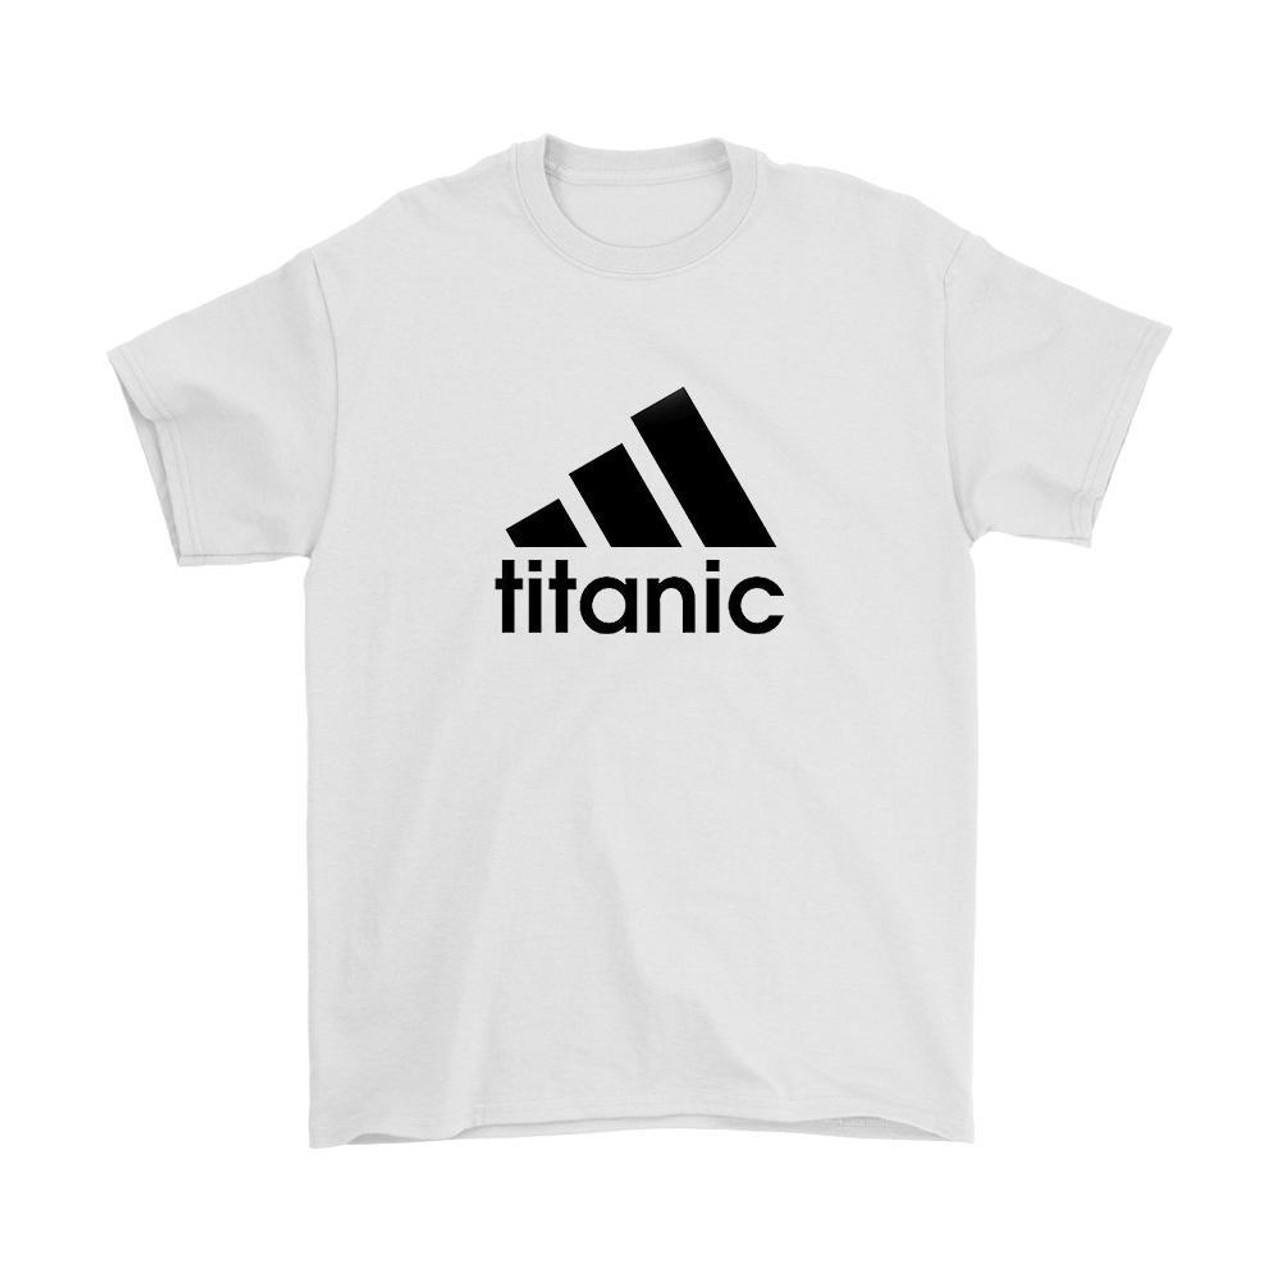 Titanic Funny Adidas Parody Man's T-Shirt